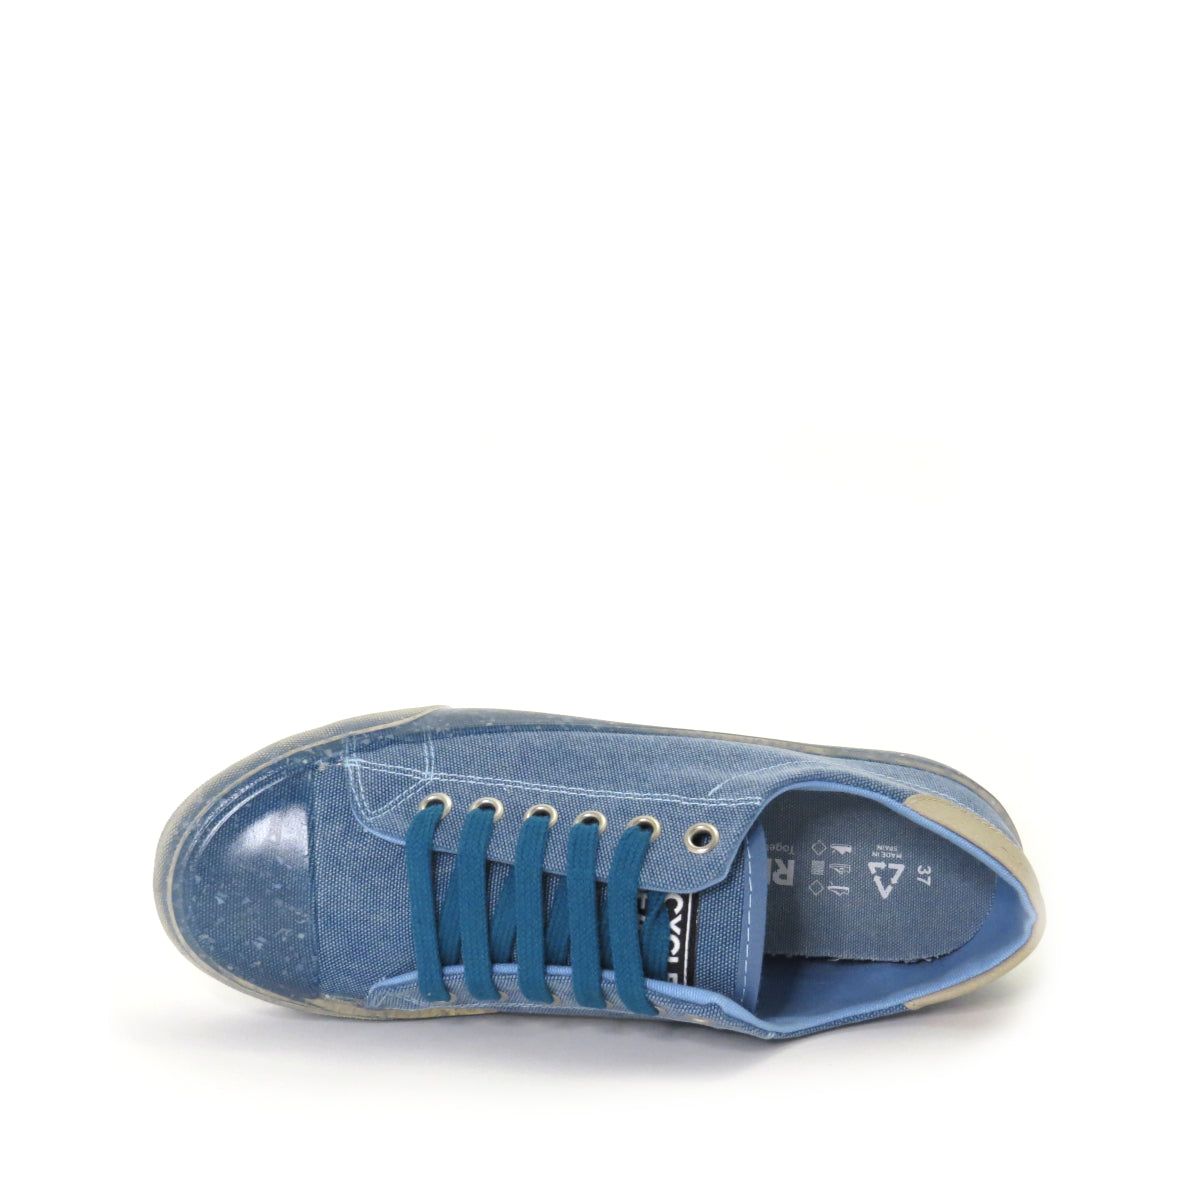 Camdem - shoe&amp;me - Recykers - Sneaker - Eco Collection, Sneaker, Summer 2020, Womens